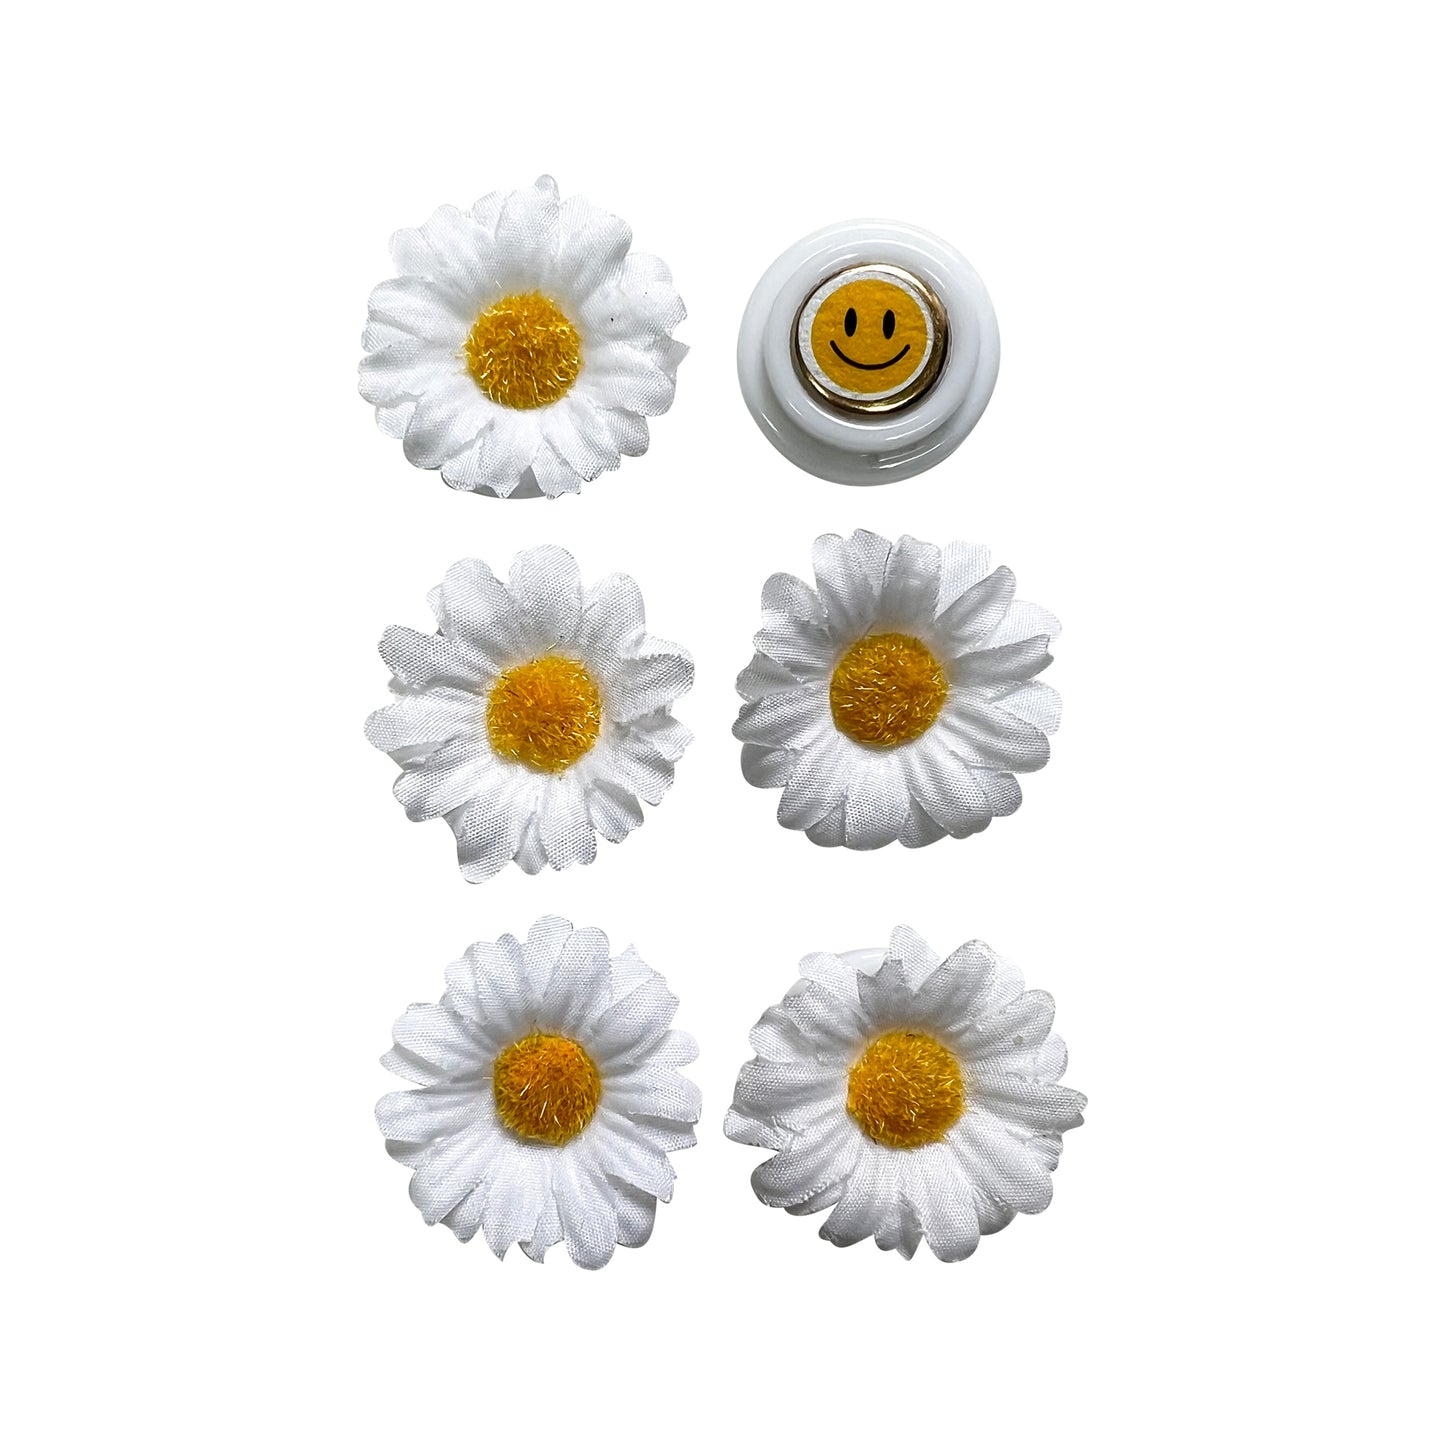 3.5" x 9.5" Vase Lemon Yellow White Polka Dot 5X 6 White Daisies Summer Love Annual Collection Complete Set